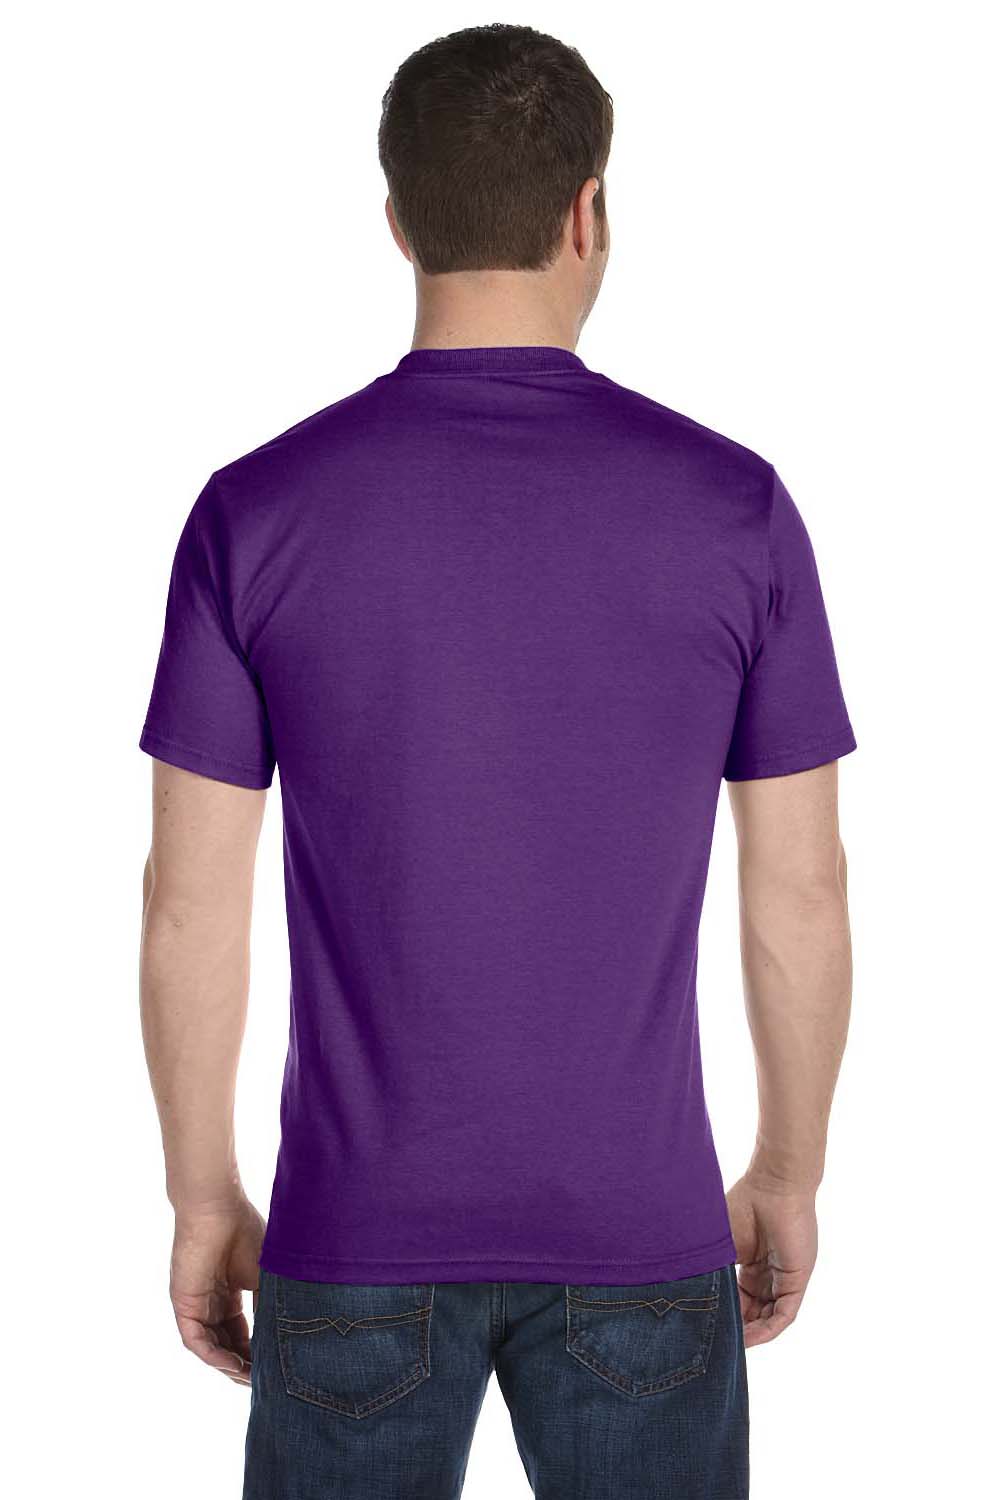 Gildan G800 Mens DryBlend Moisture Wicking Short Sleeve Crewneck T-Shirt Purple Back